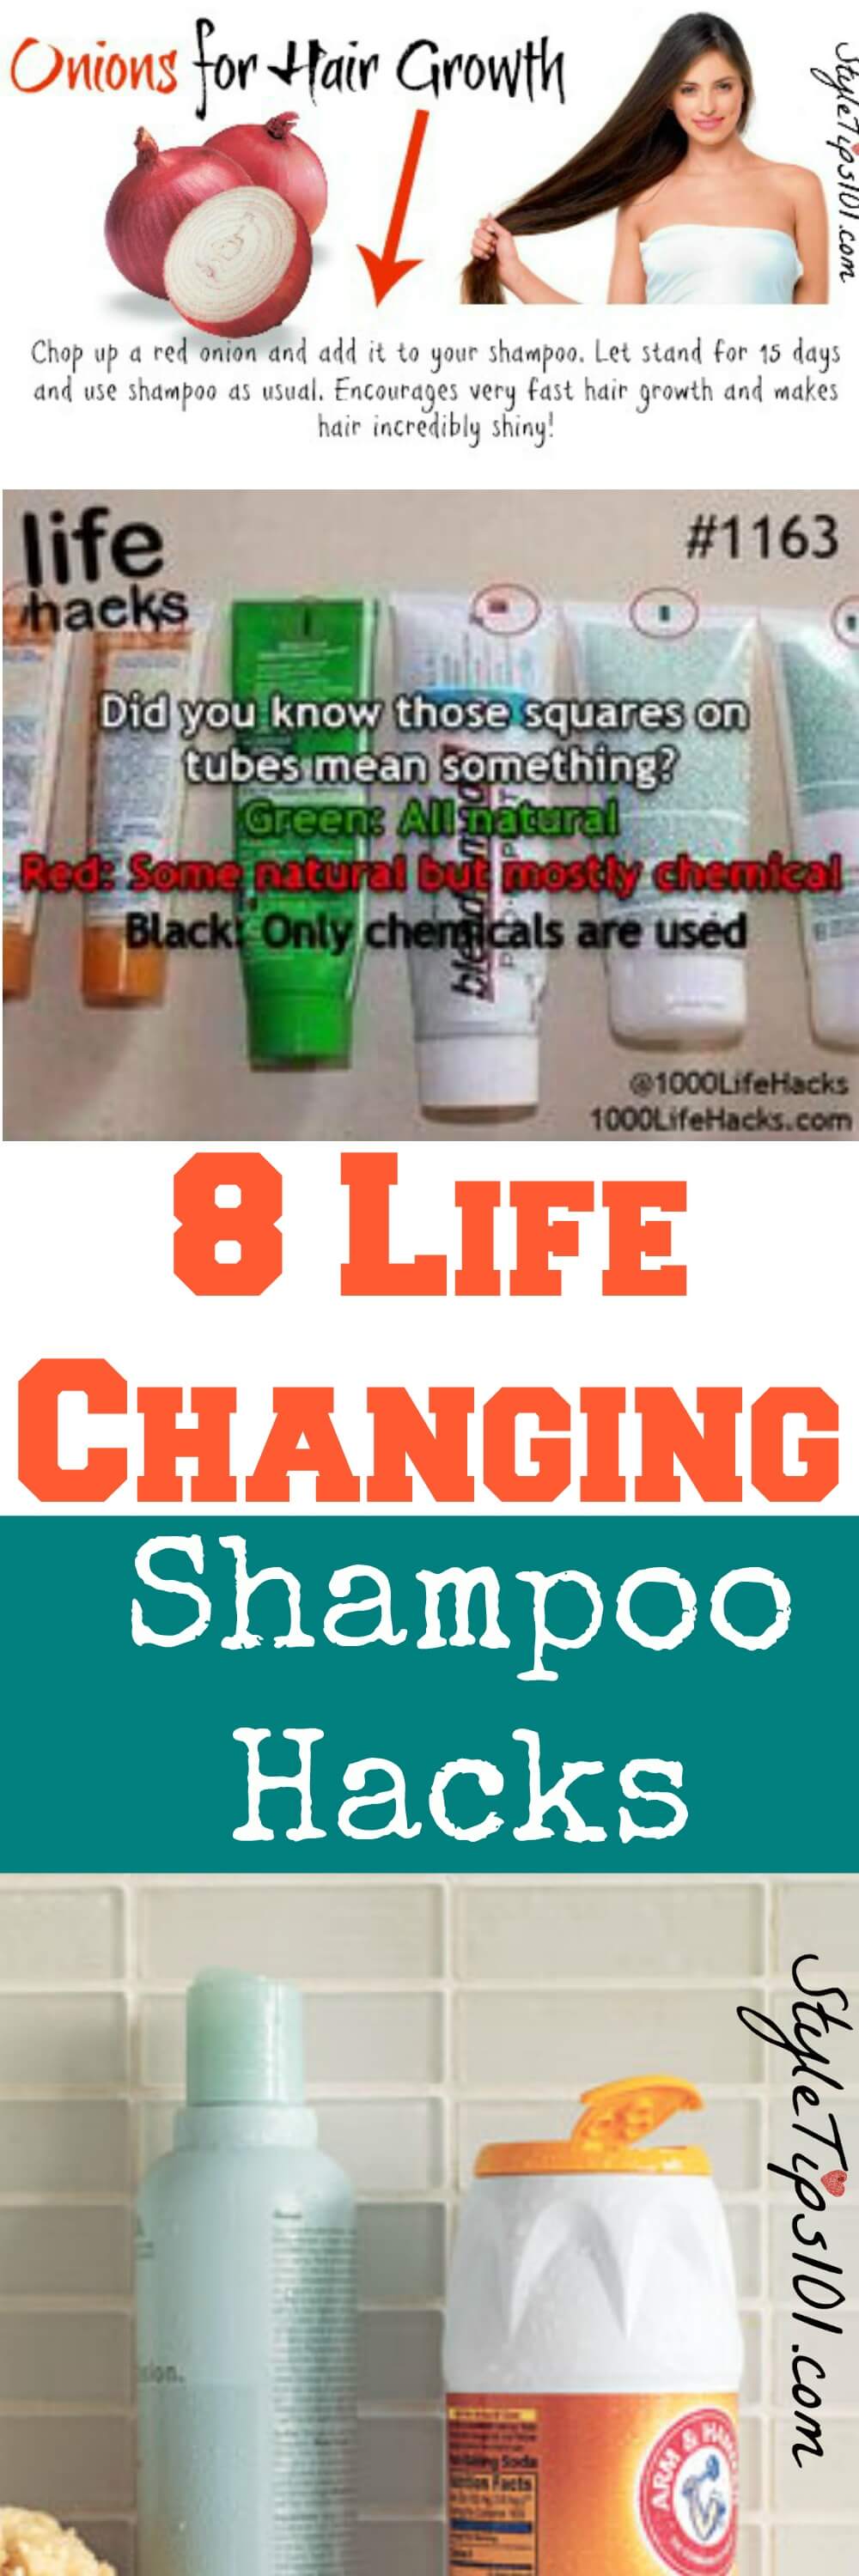 shampoo hacks